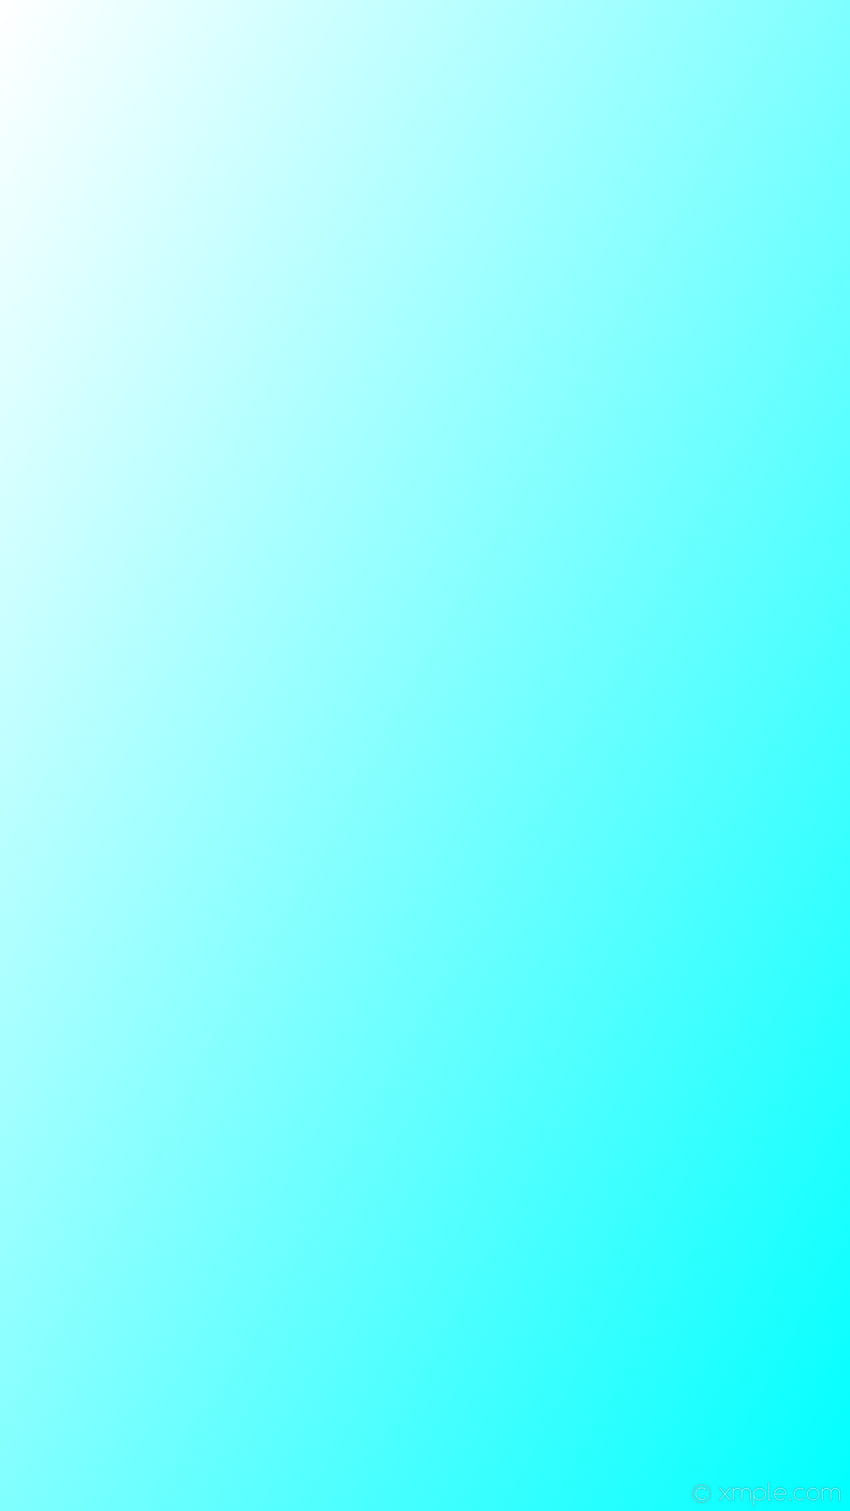 Premium Vector  Abstract blurred blue green cyan aqua tiffany blue  gradient wallpaper background vector illustration